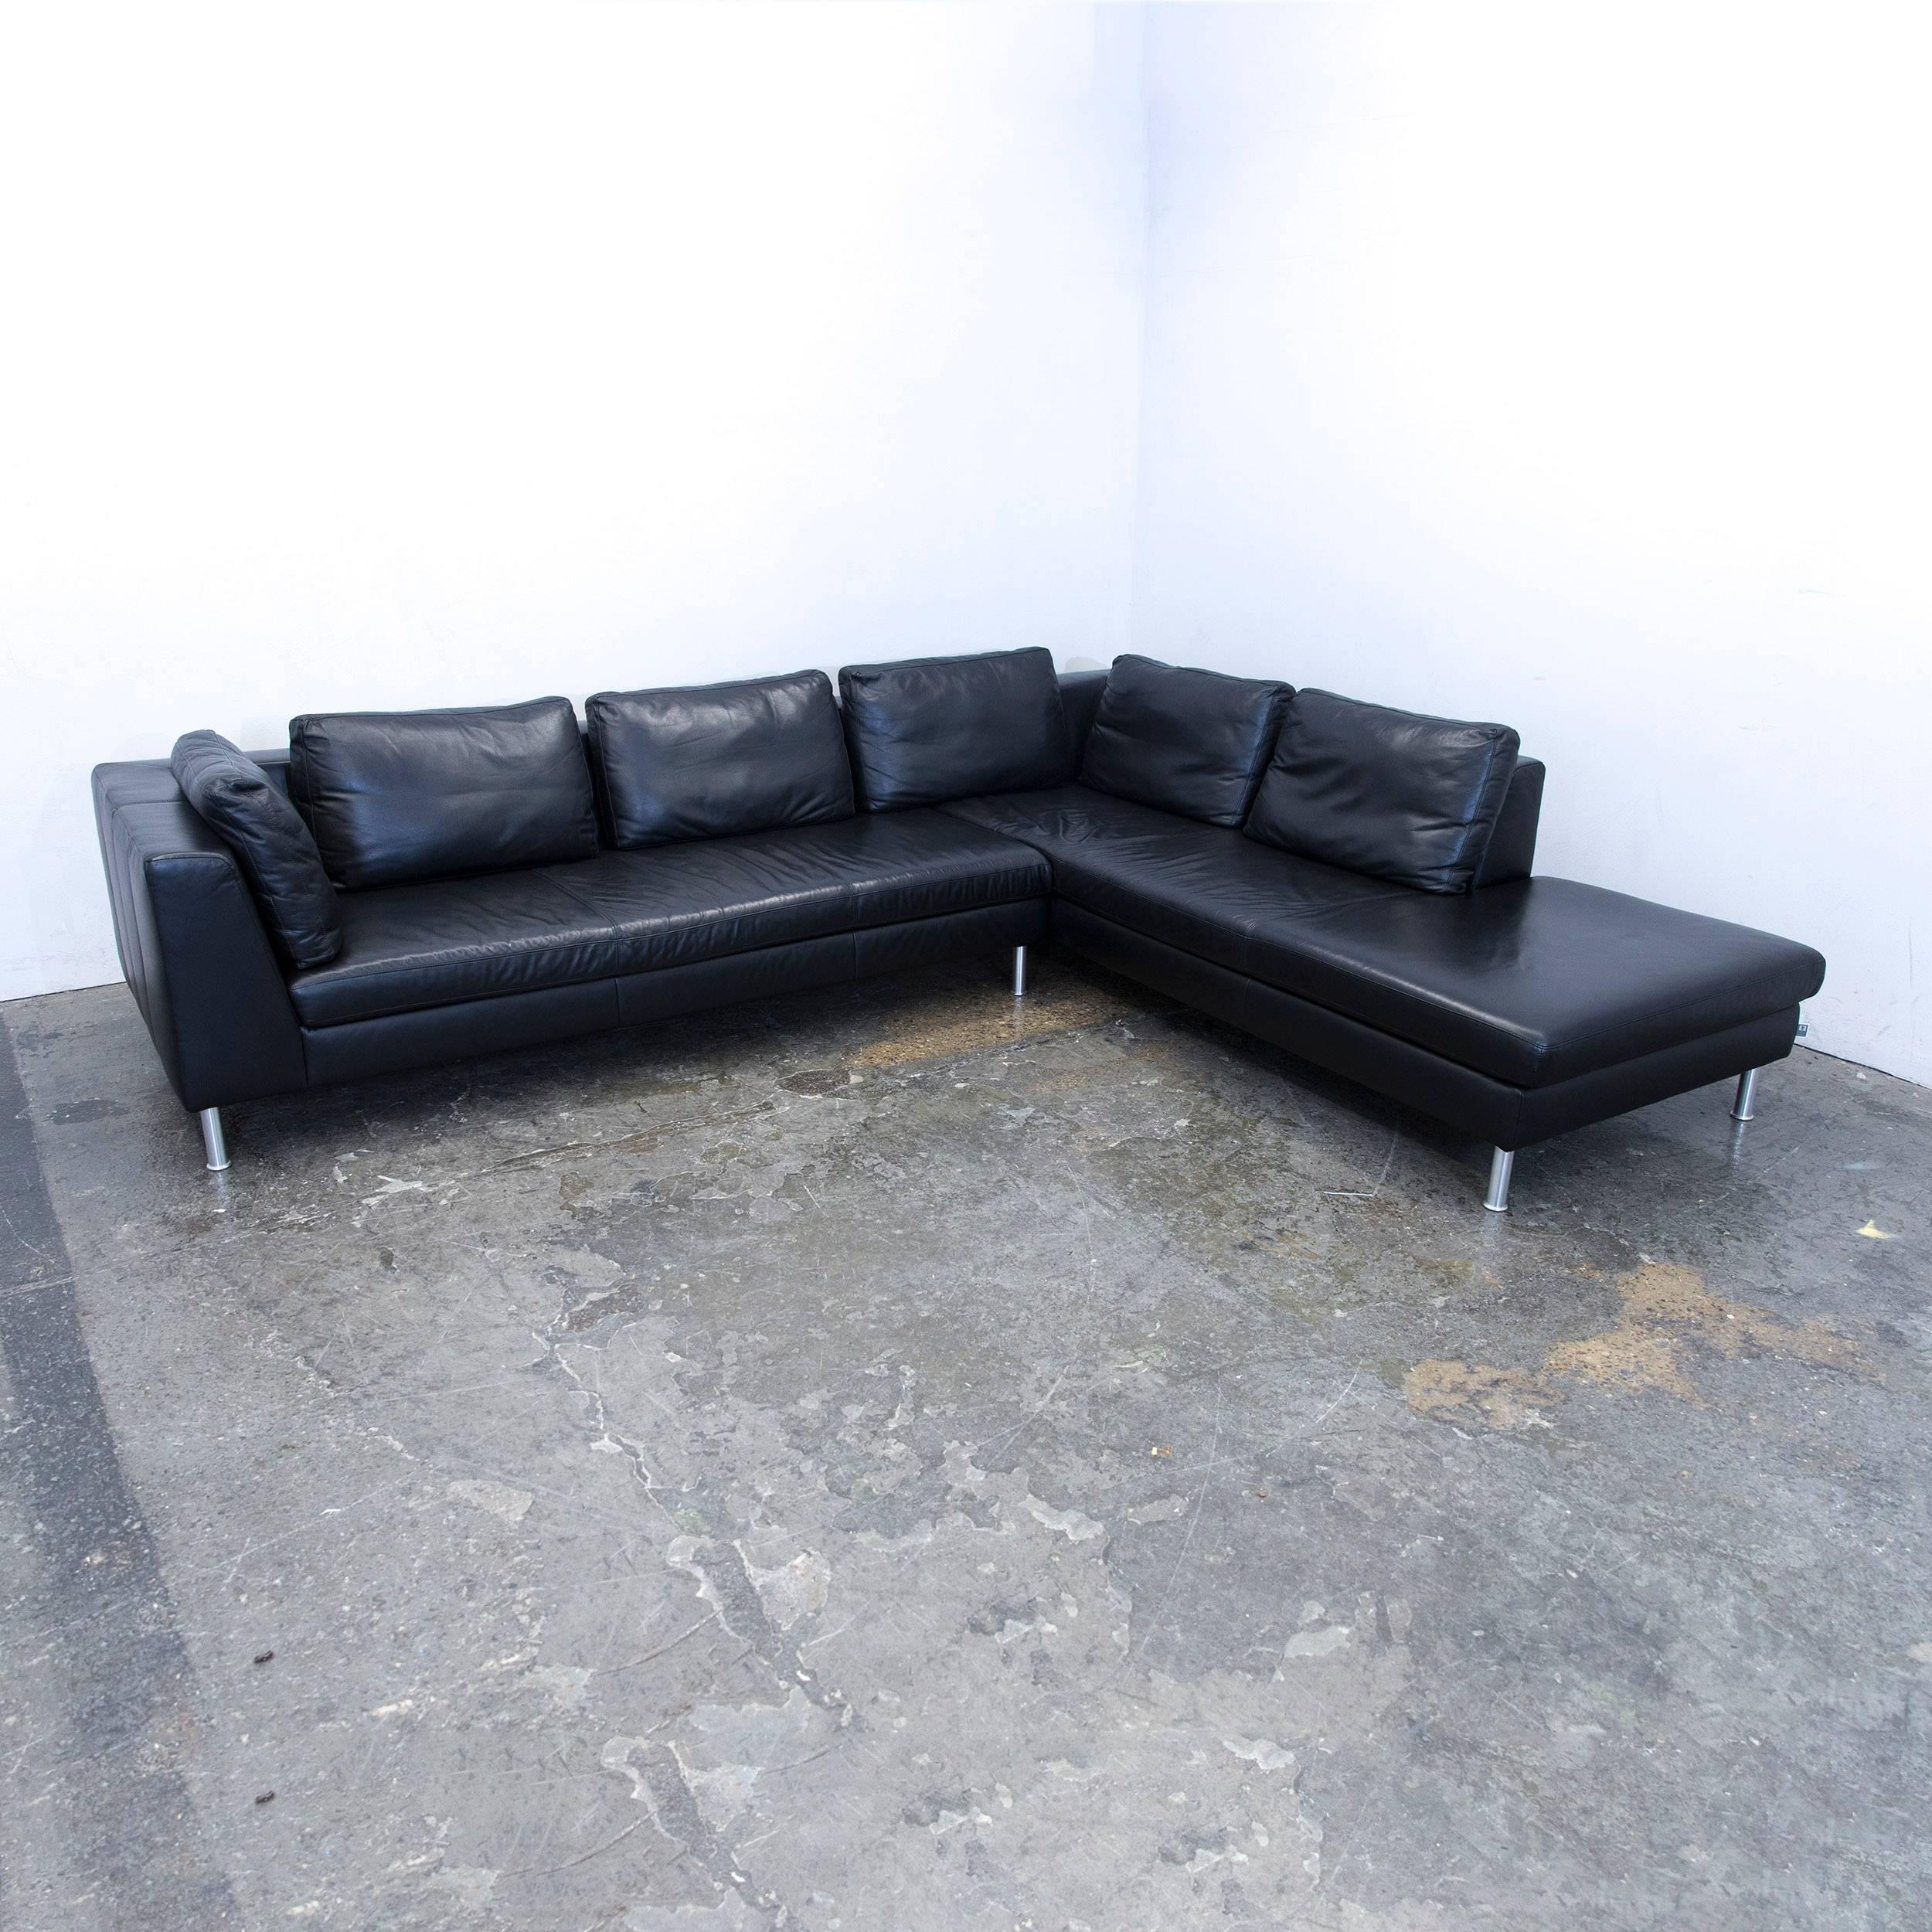 Black colored original Ewald Schillig designer corner sofa, in a minimalistic and modern design, made for pure comfort.